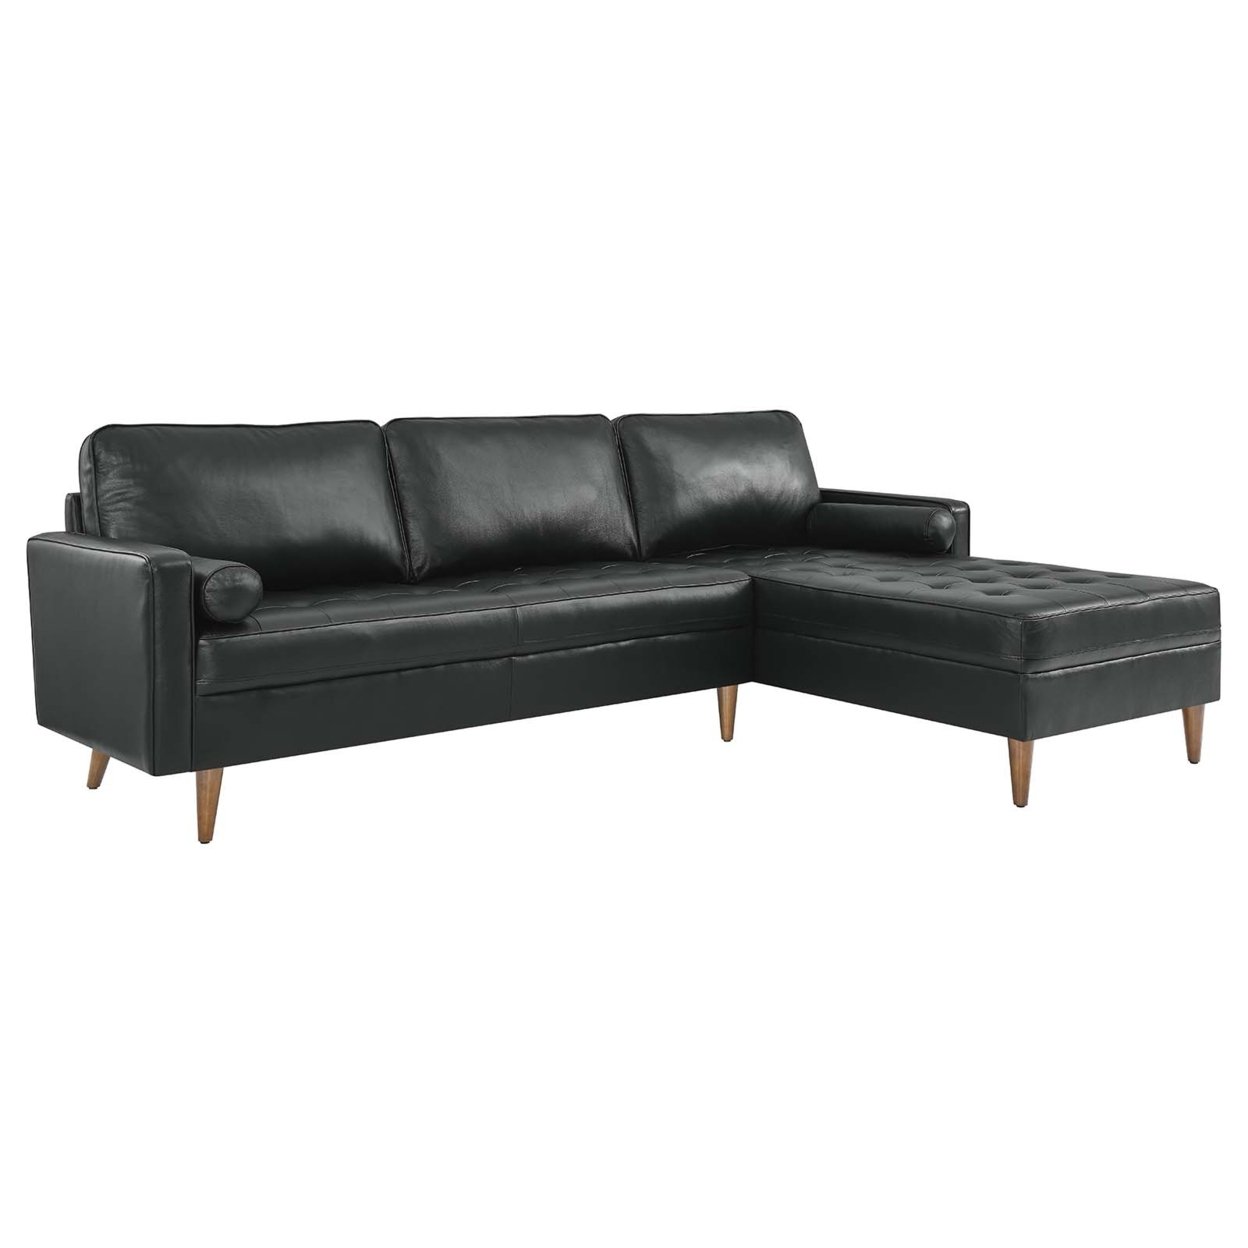 Valour 98 Leather Sectional Sofa, Black